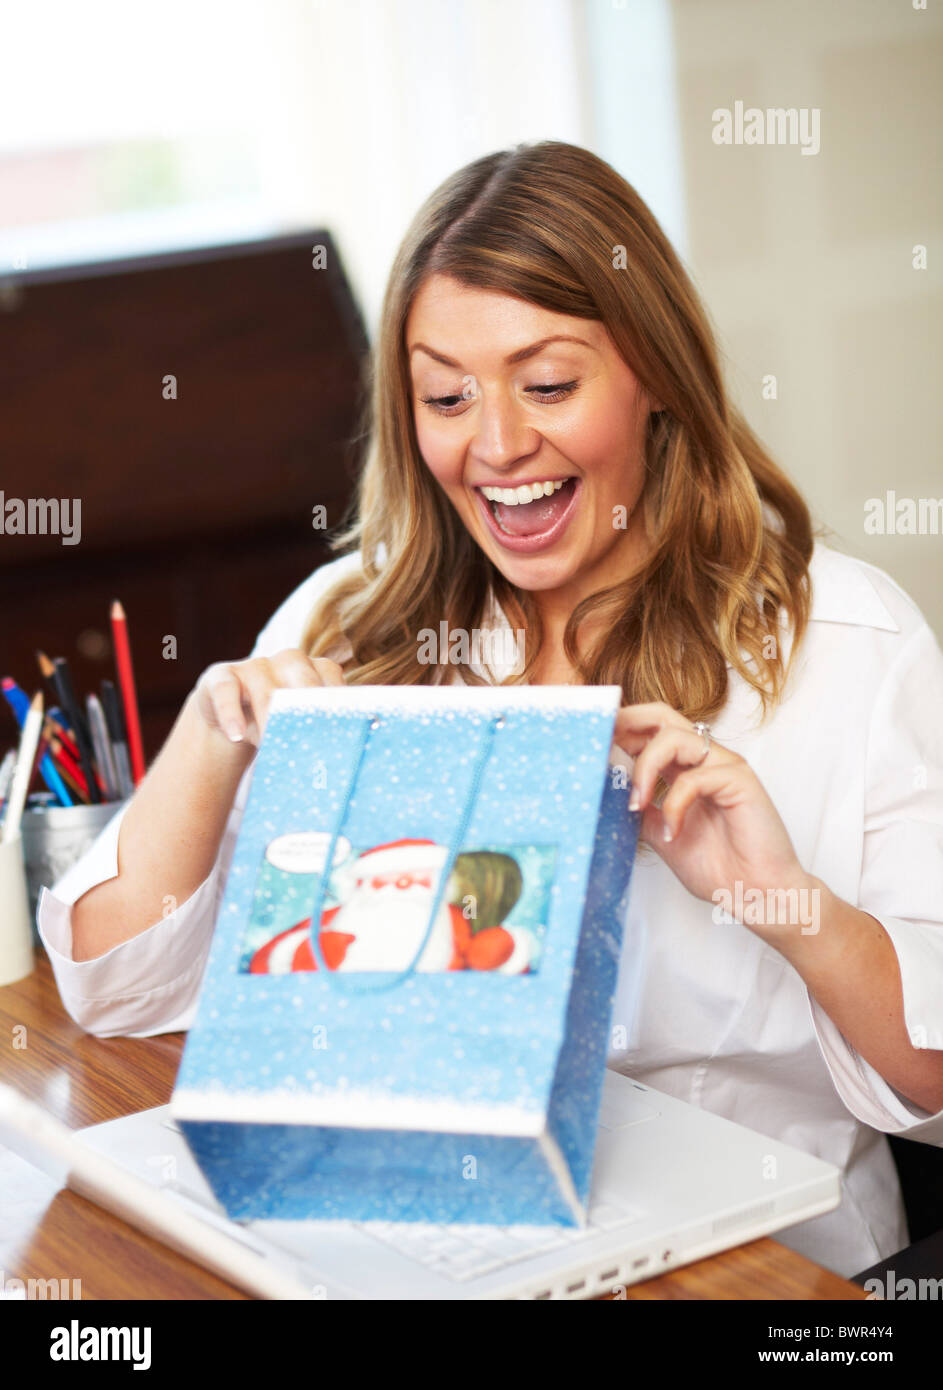 Girls in office opening secret Santa presents Stock Photo